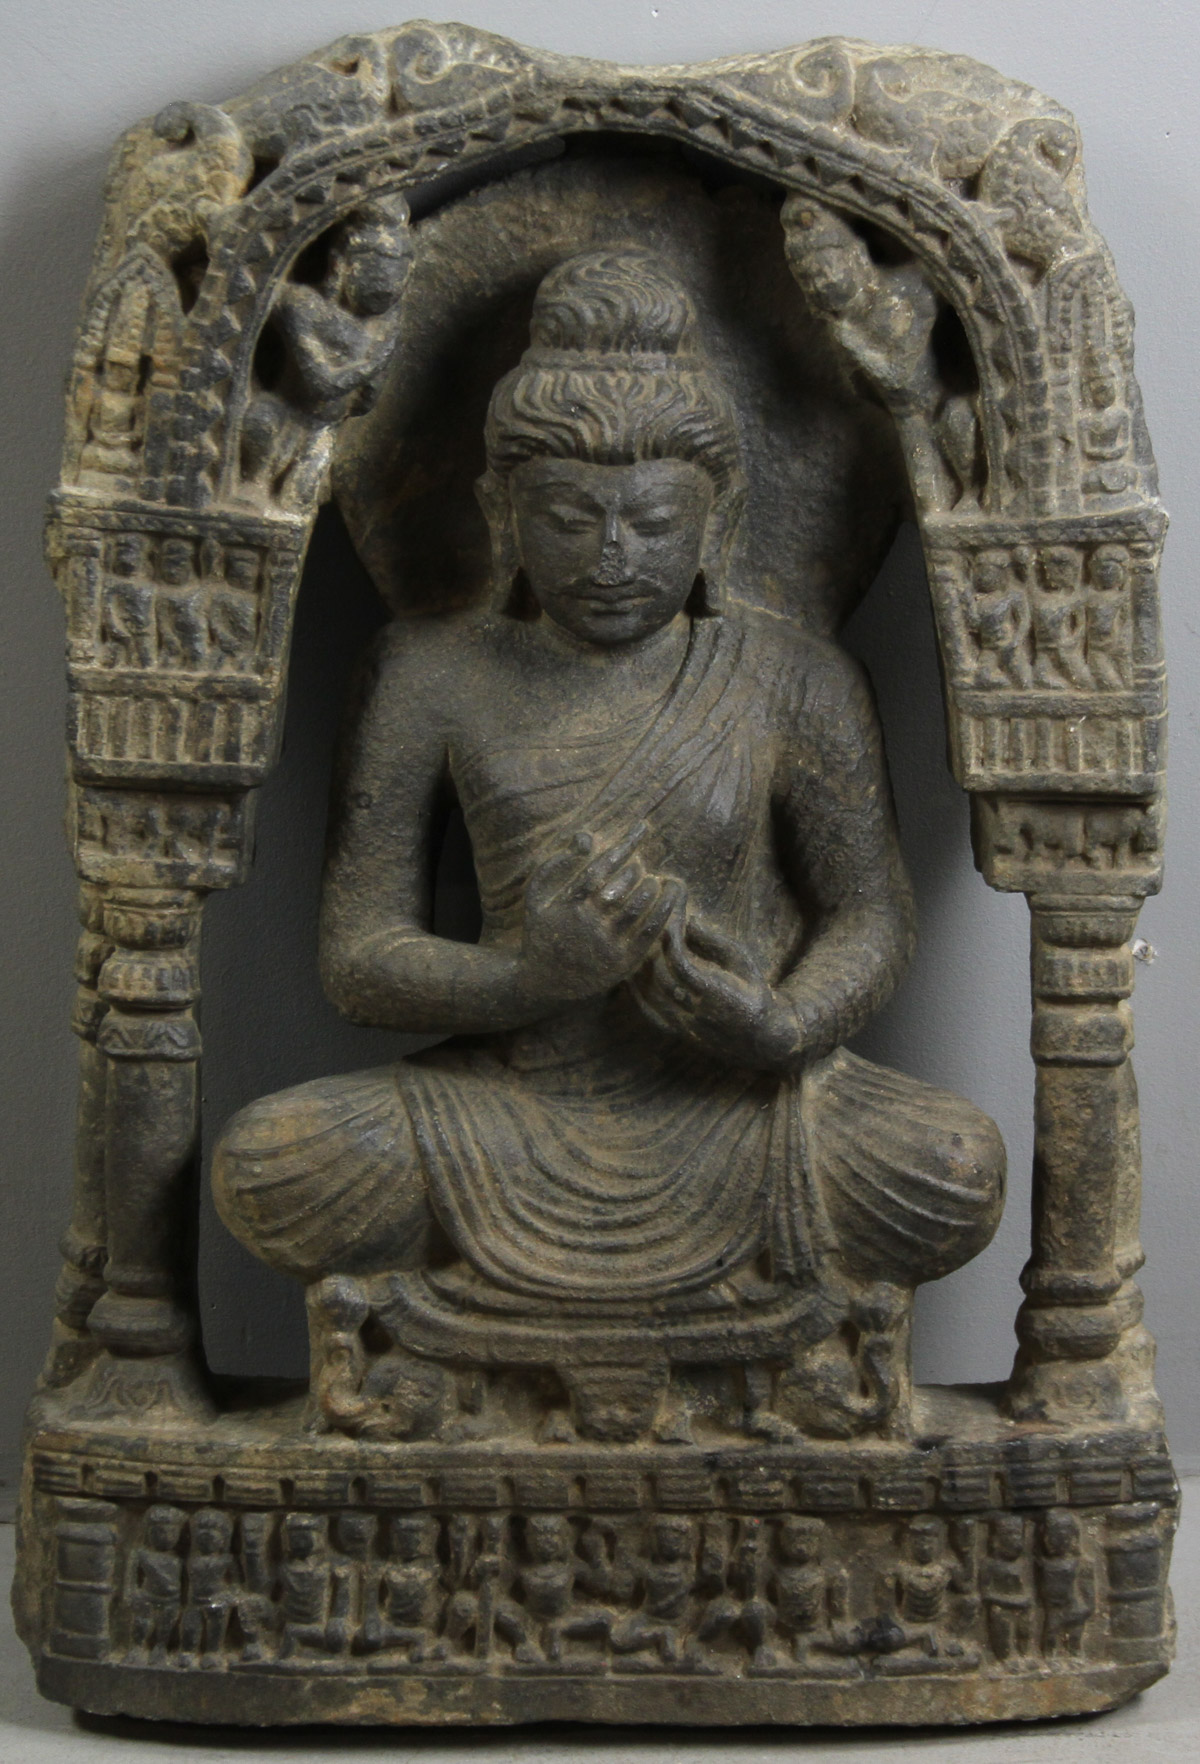 3rd or 4th century Gandhara Buddha